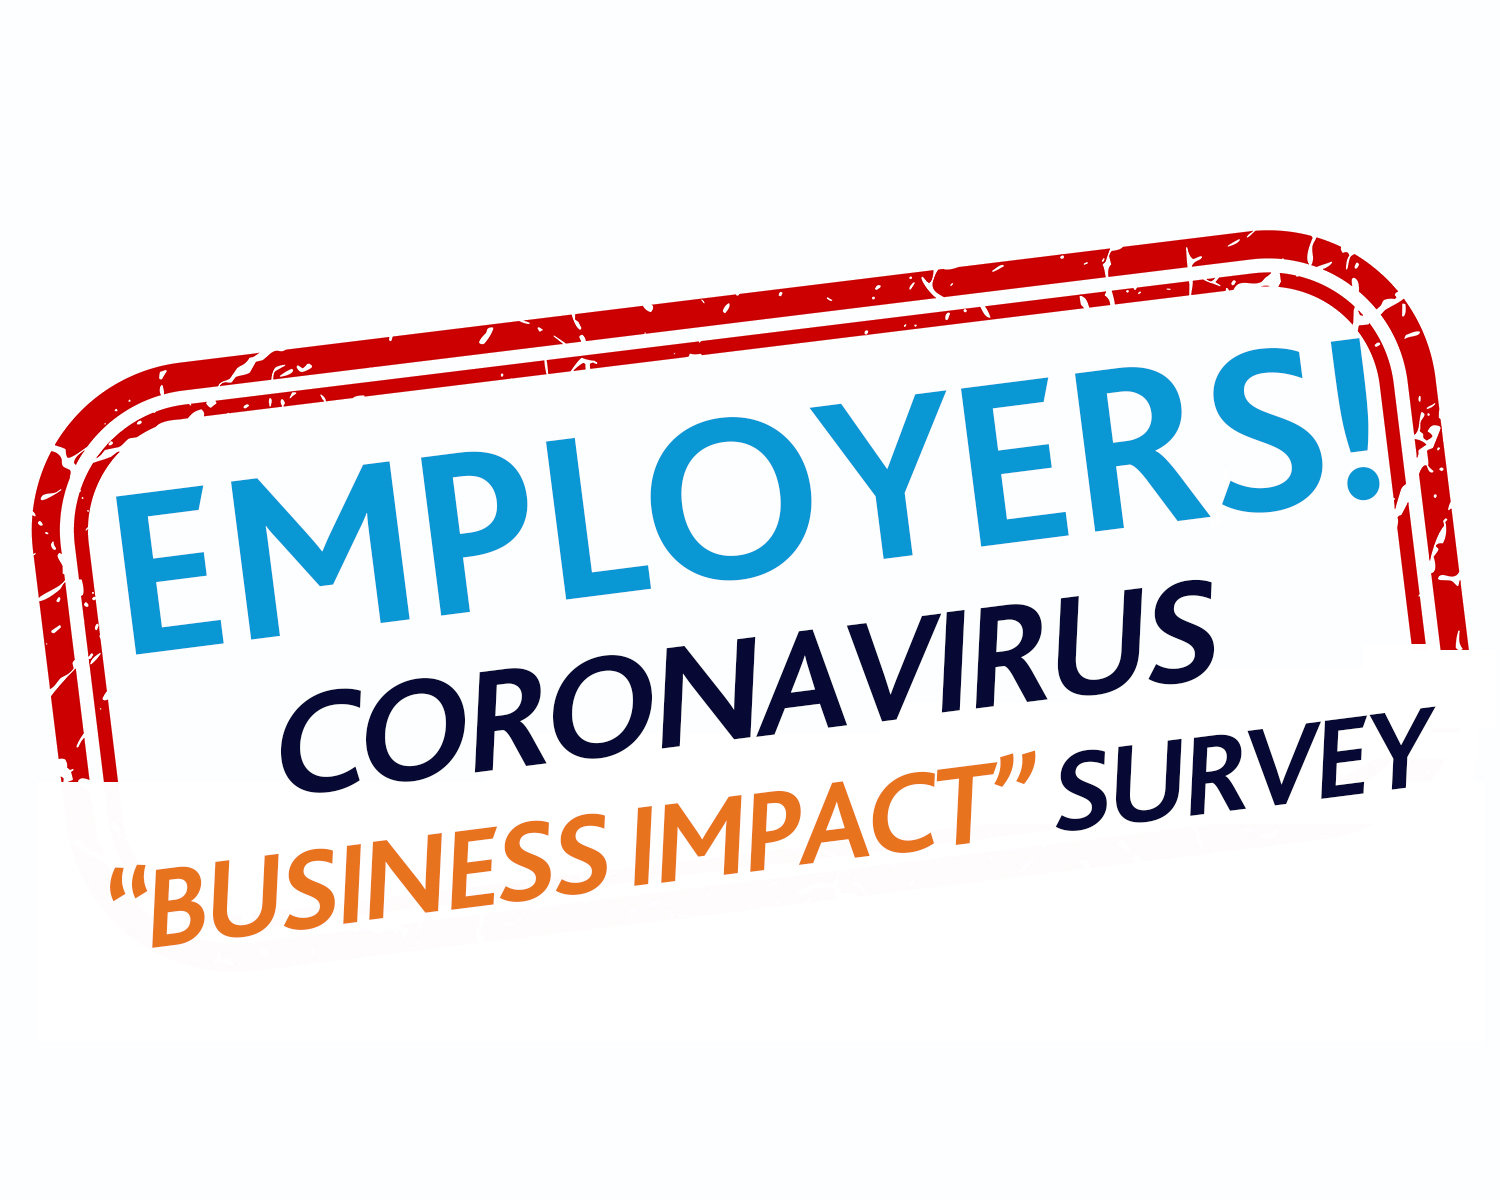 Coronavirus employment survey business impact uk